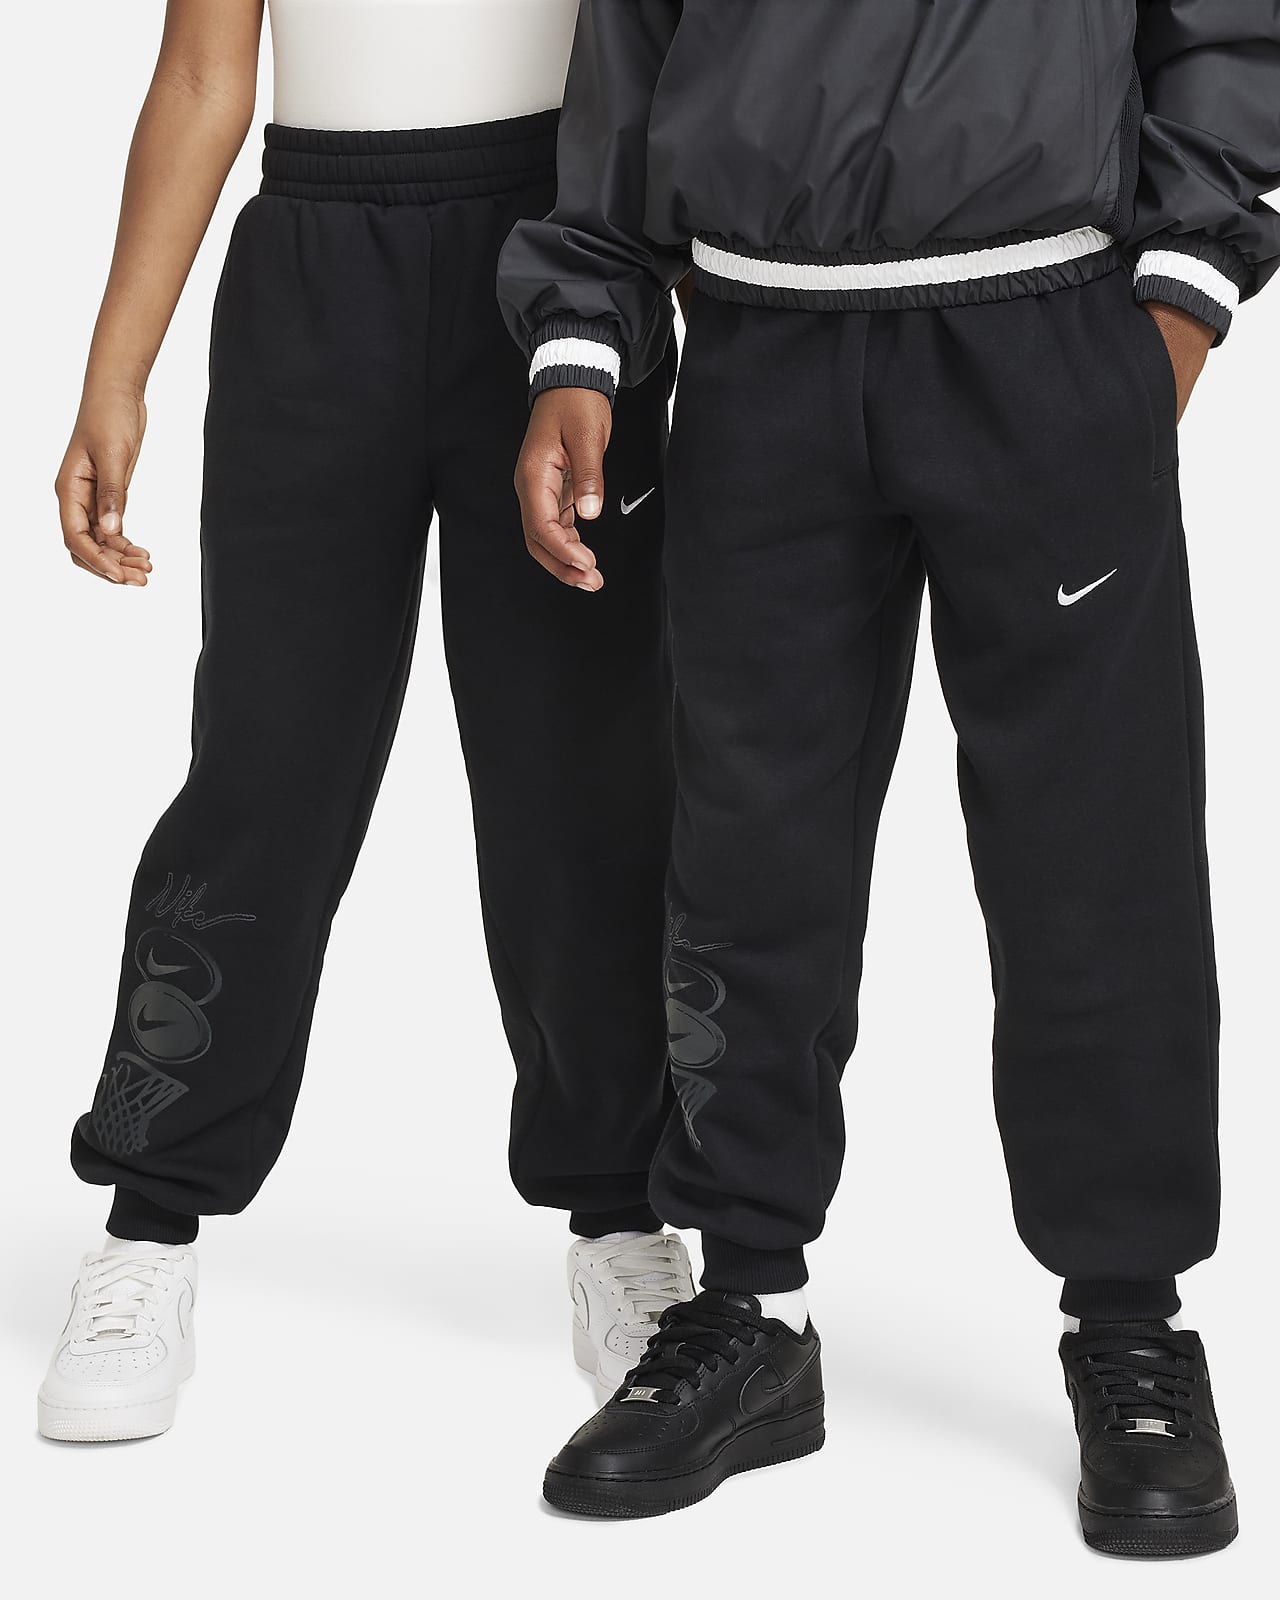 Nike Culture of Basketball Pantalons de teixit Fleece - Nen/a